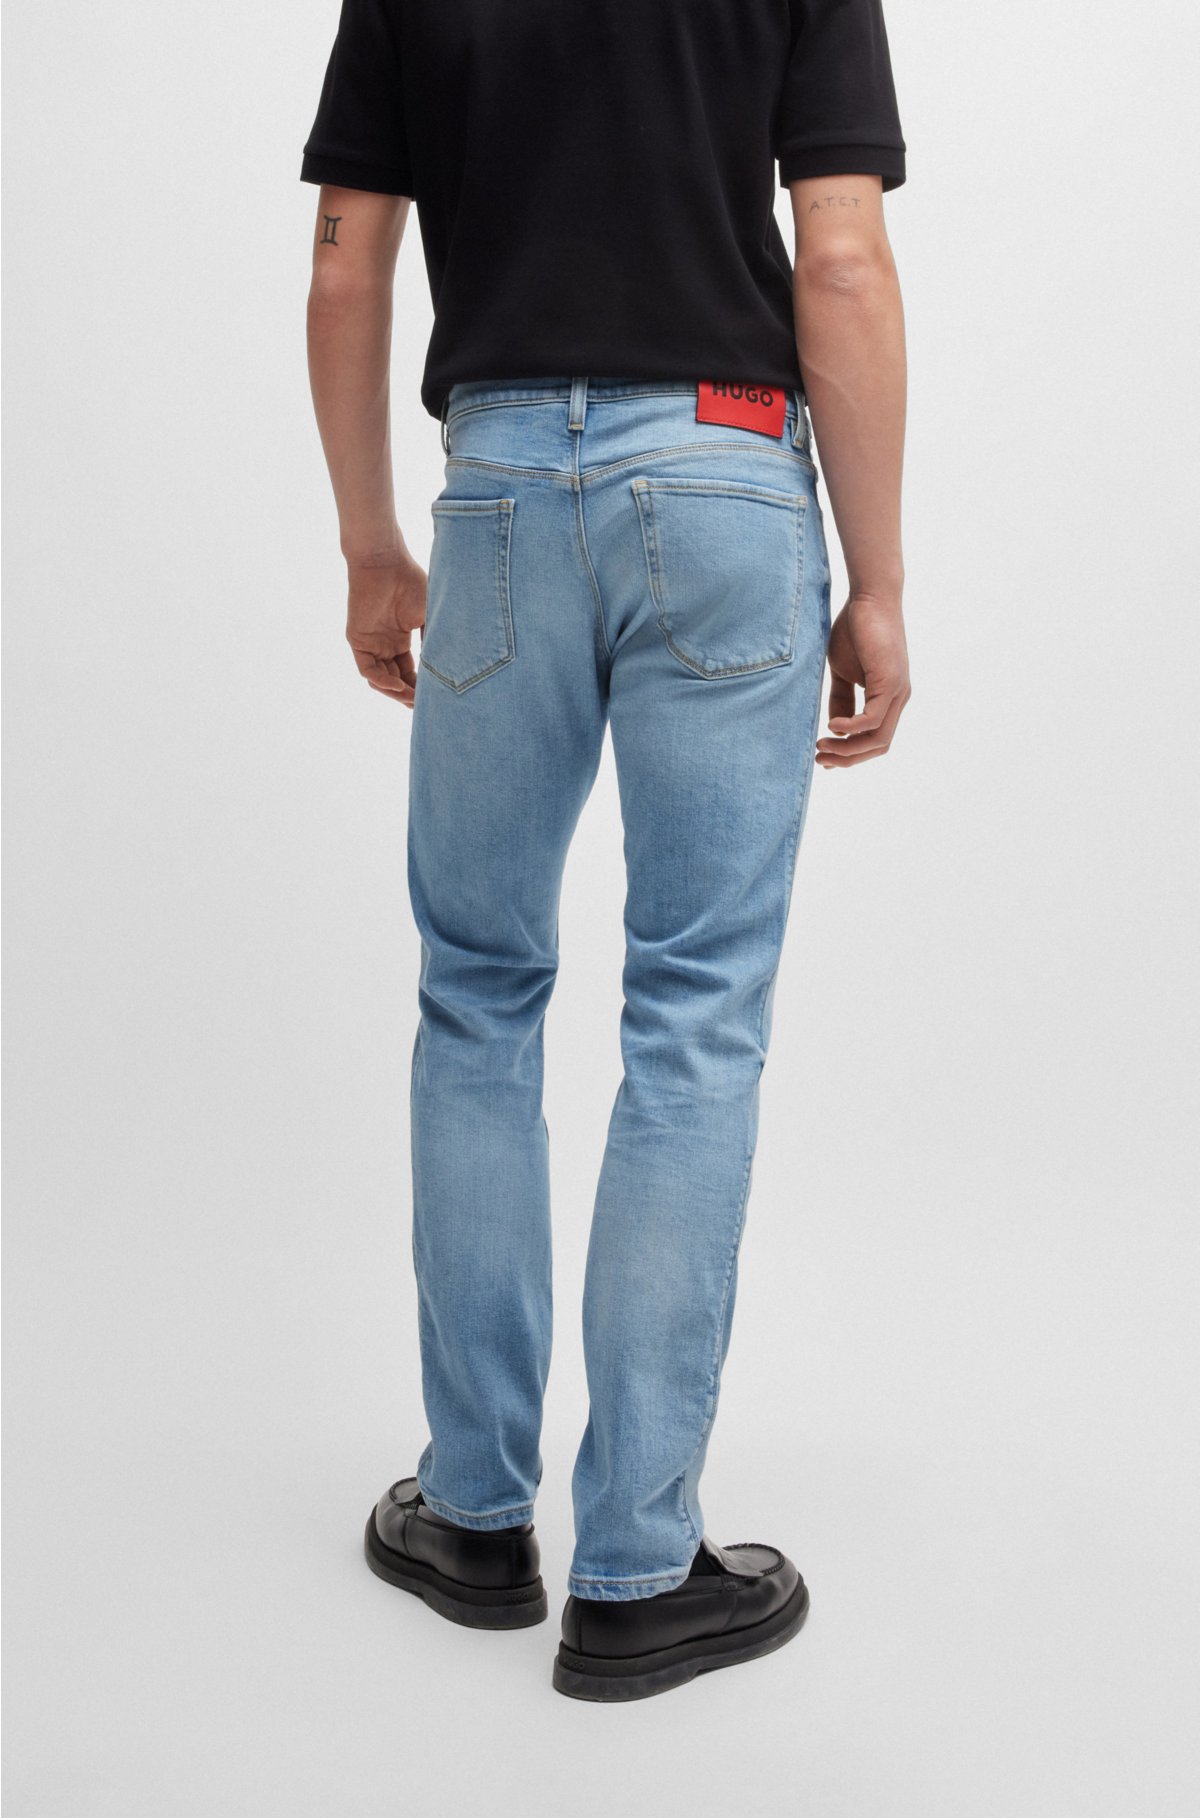 Slim-fit jeans in light-blue stretch denim, Light Blue